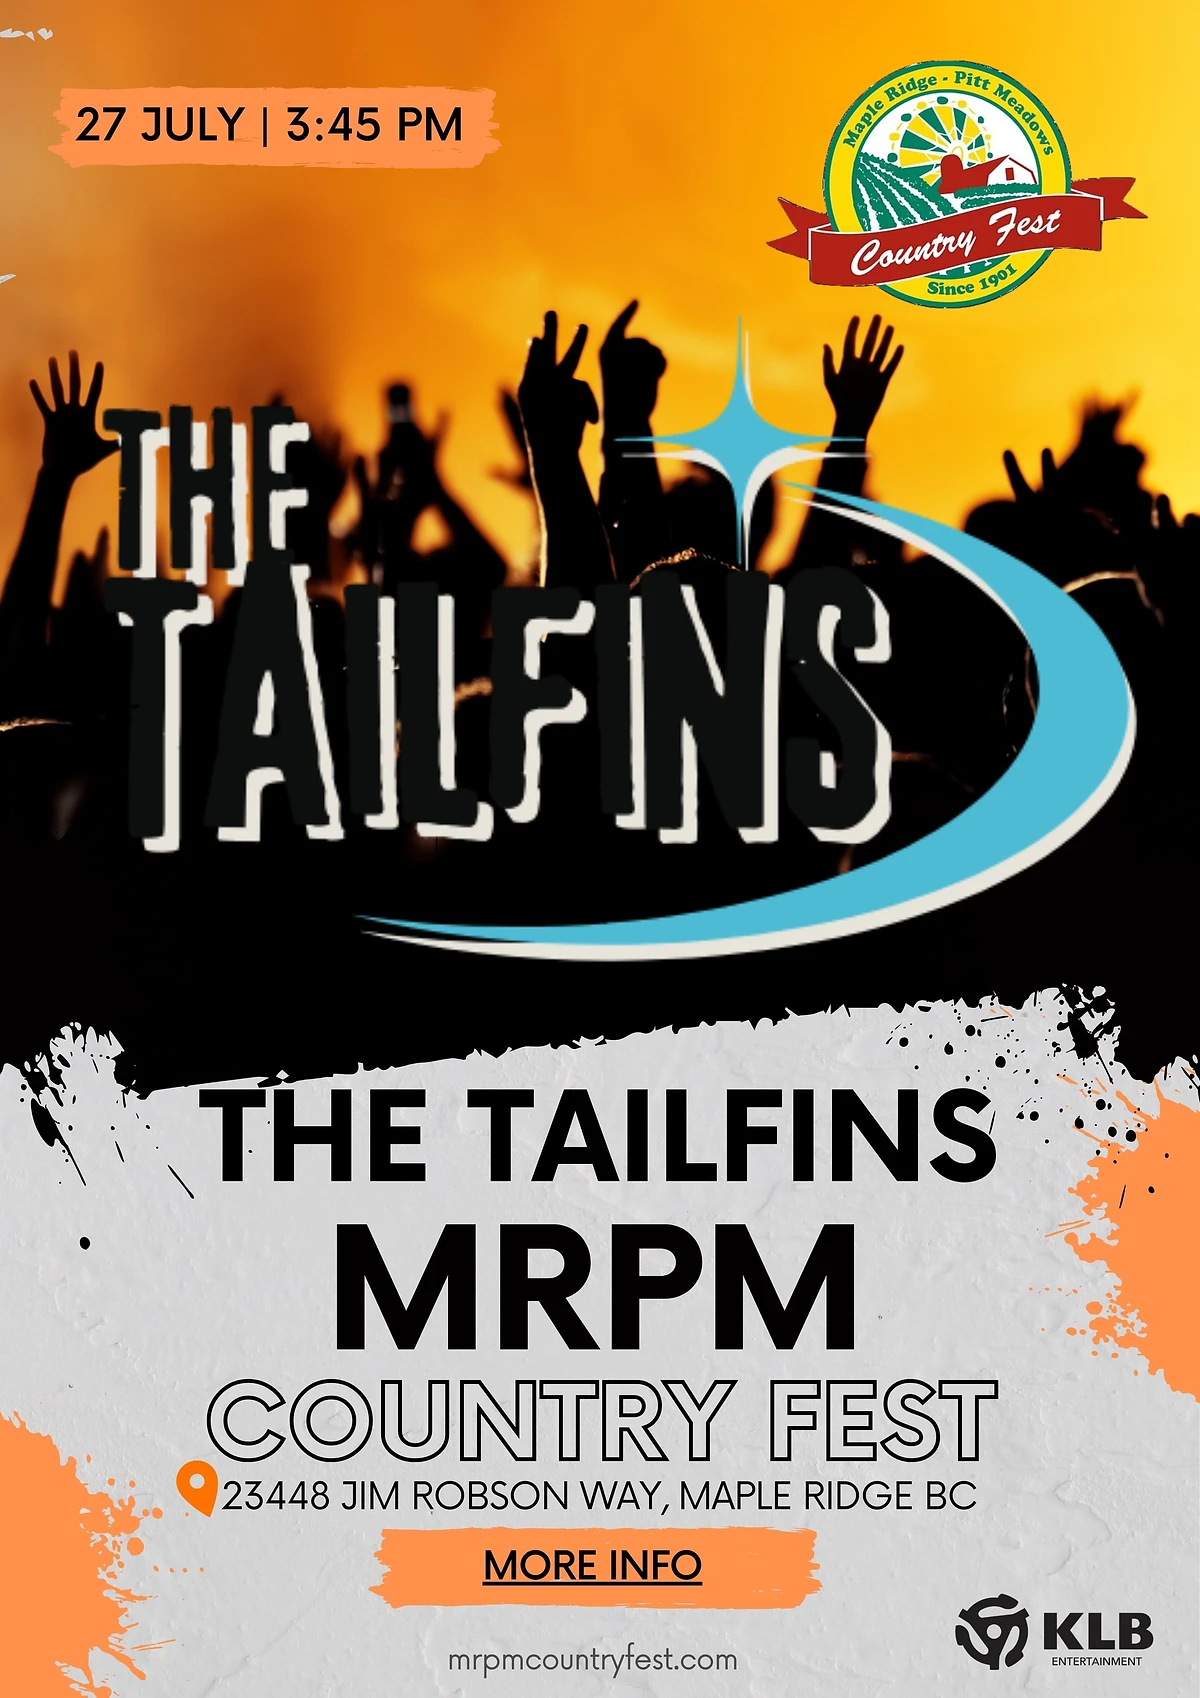 The Tailfins